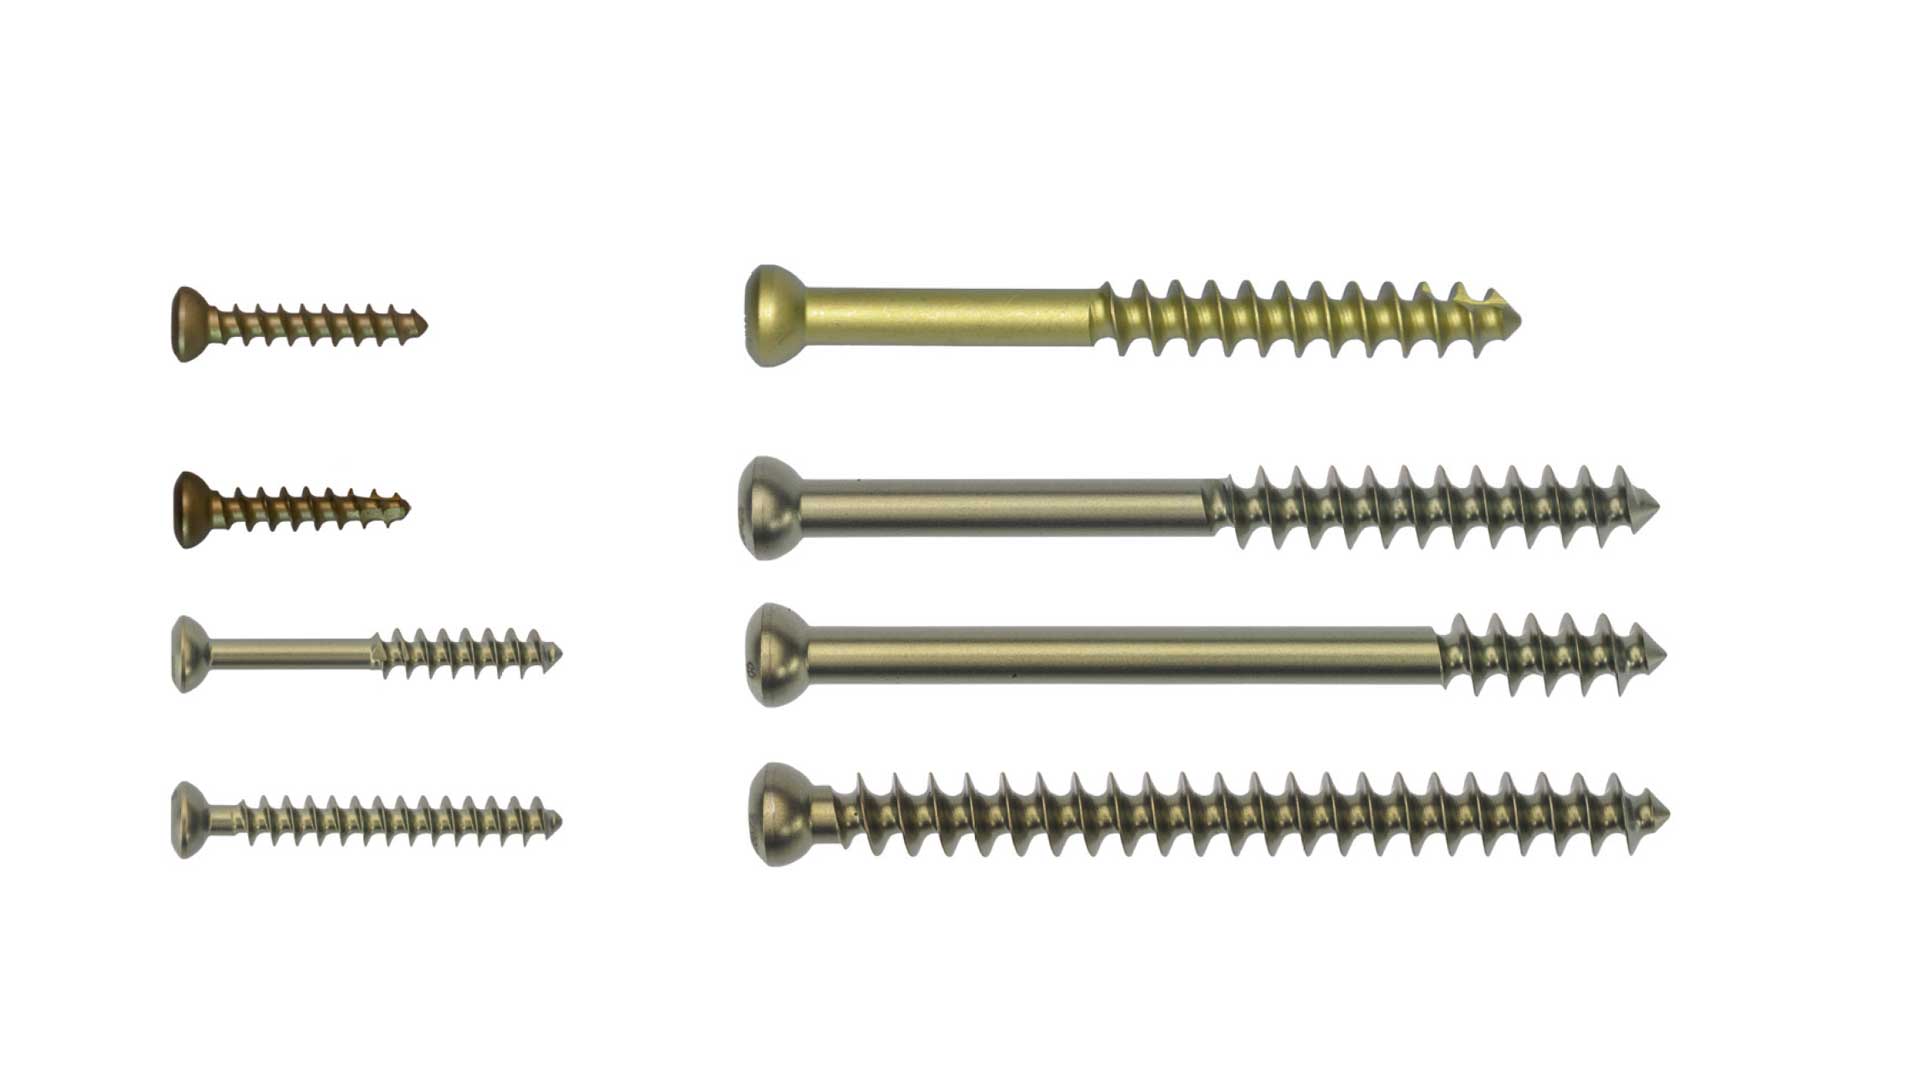 Königsee Implantate Products: Cancellous screws Standard; titanium, category Screws